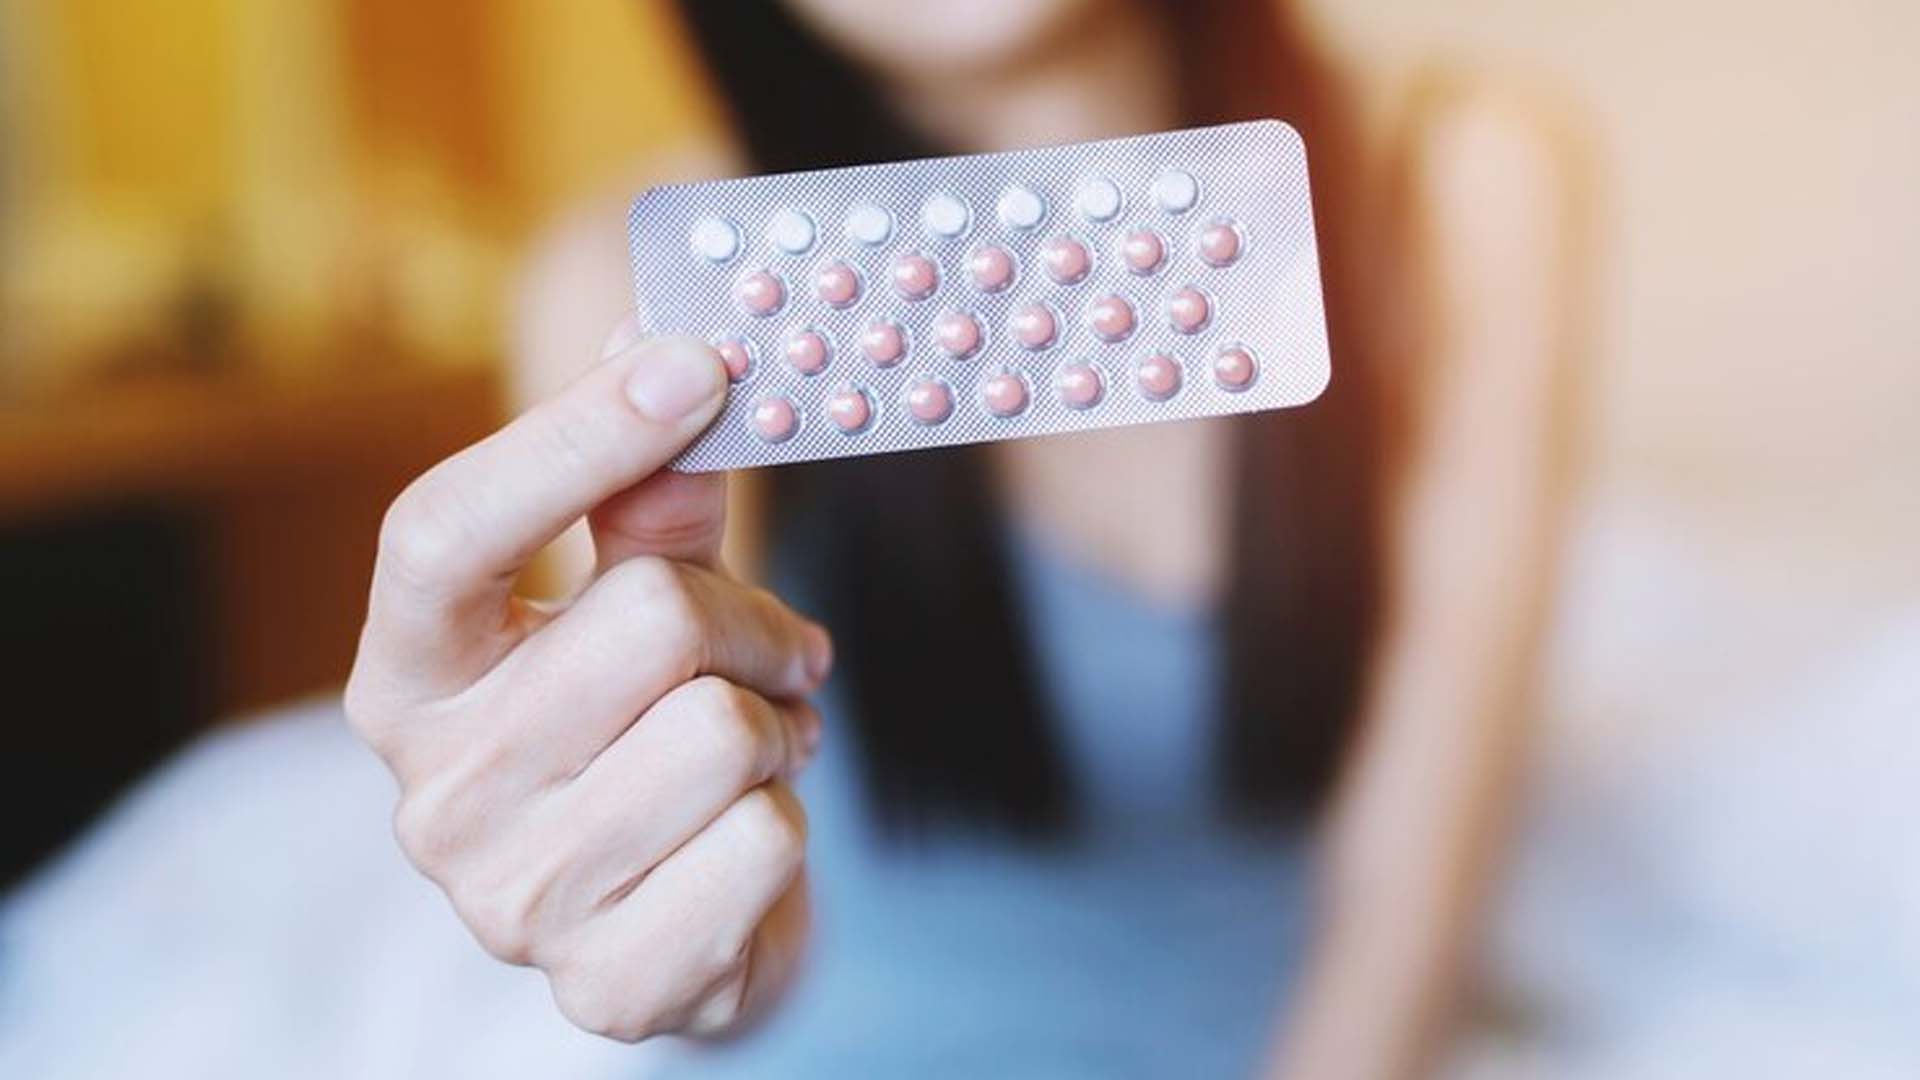 Birth Control Pills or contraceptive pills